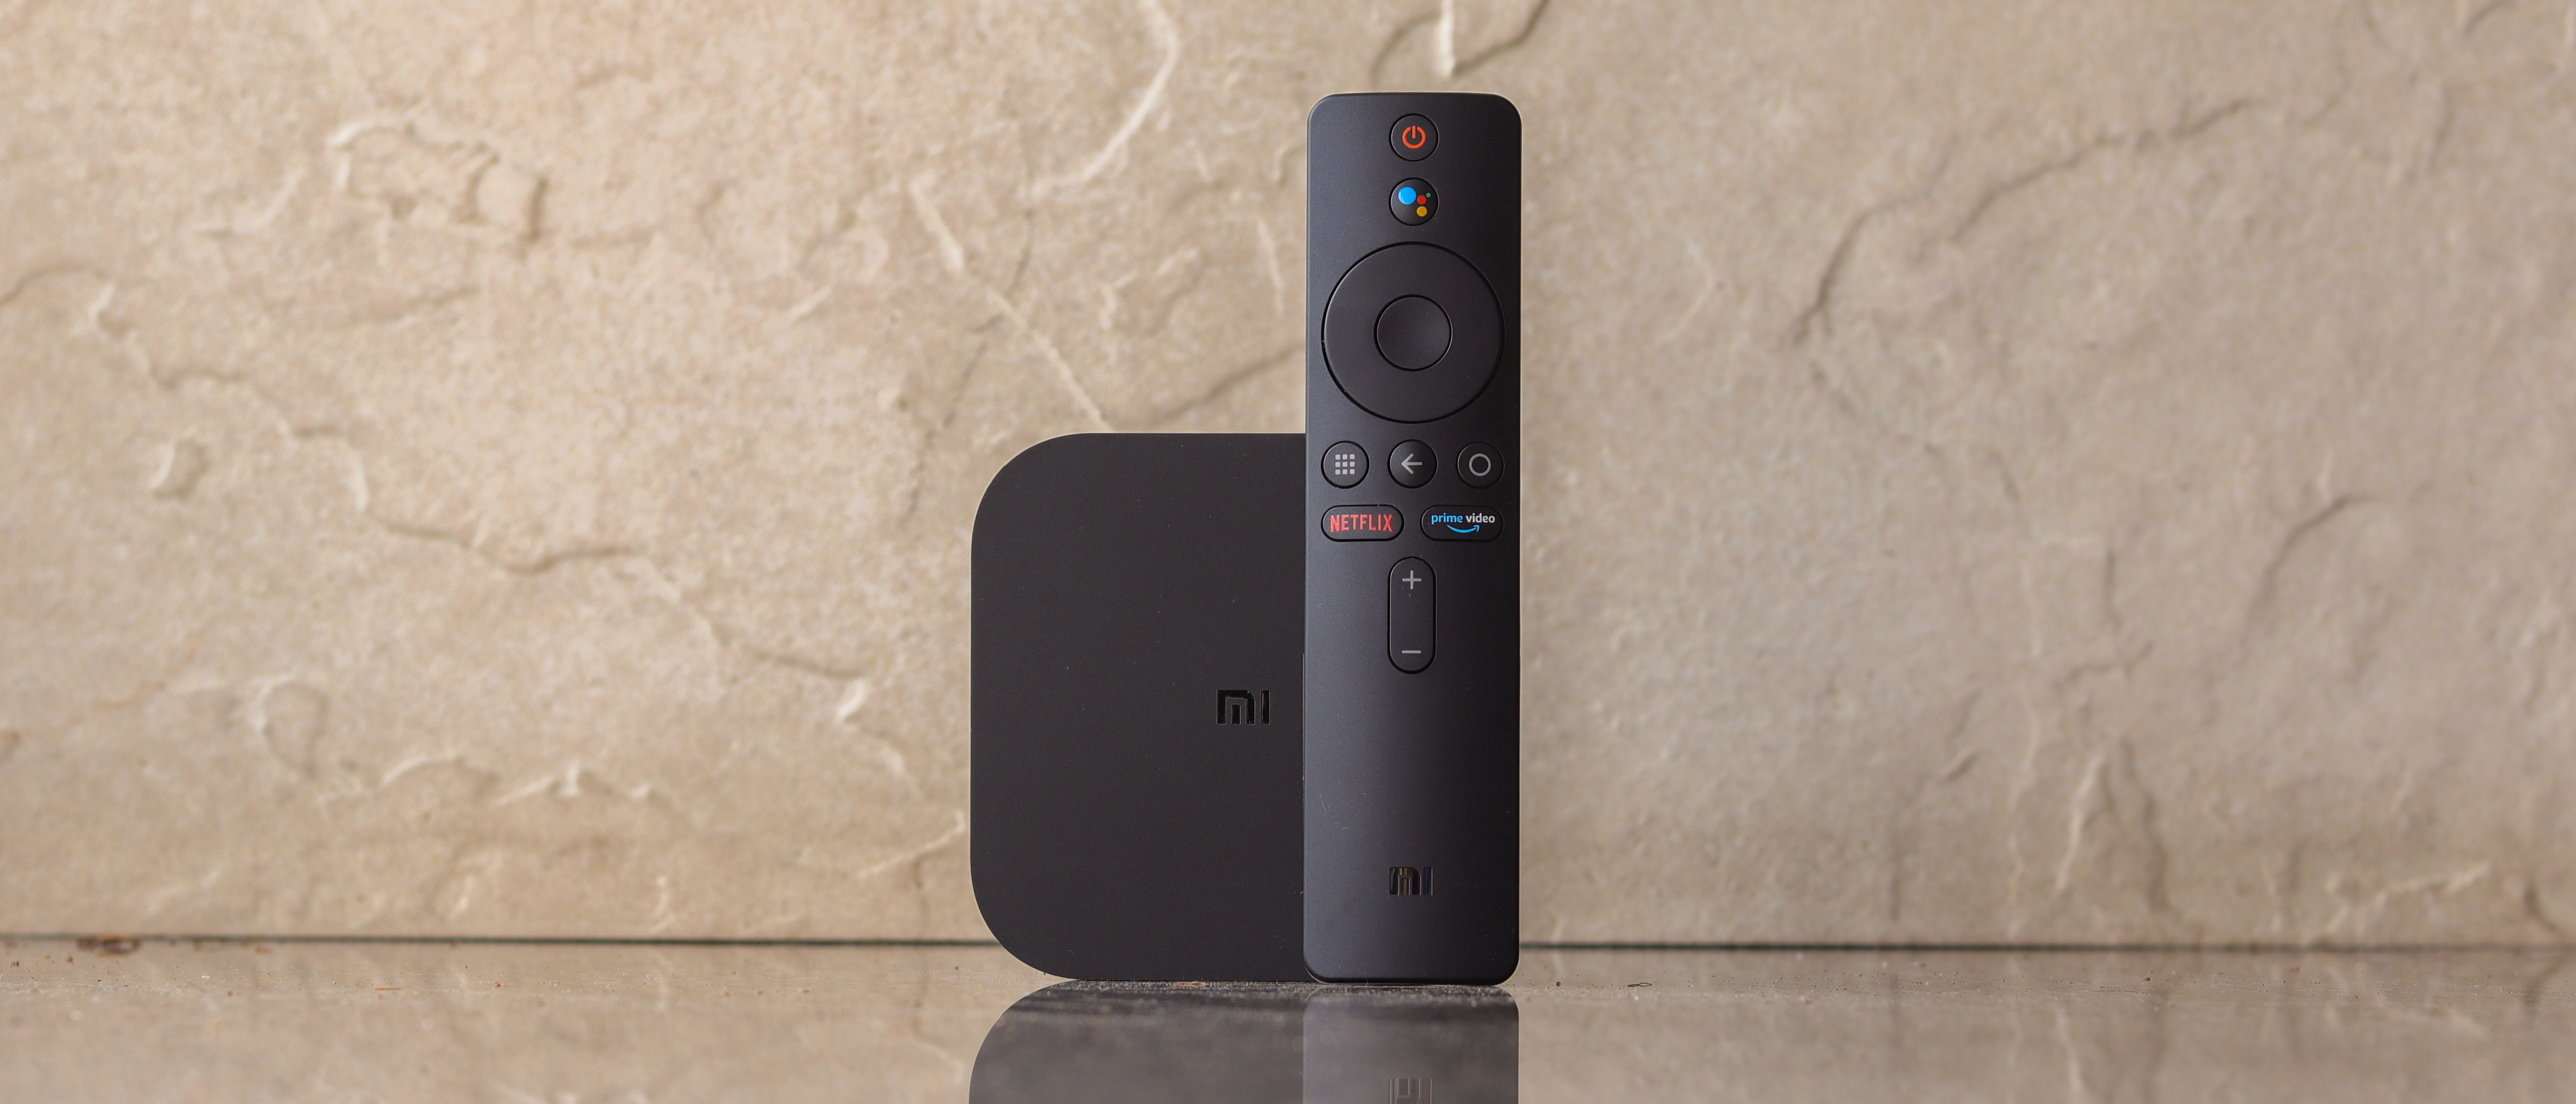 Wi Fi Mi Box 4K Ultra HD Streaming Player Android TV Box at Rs